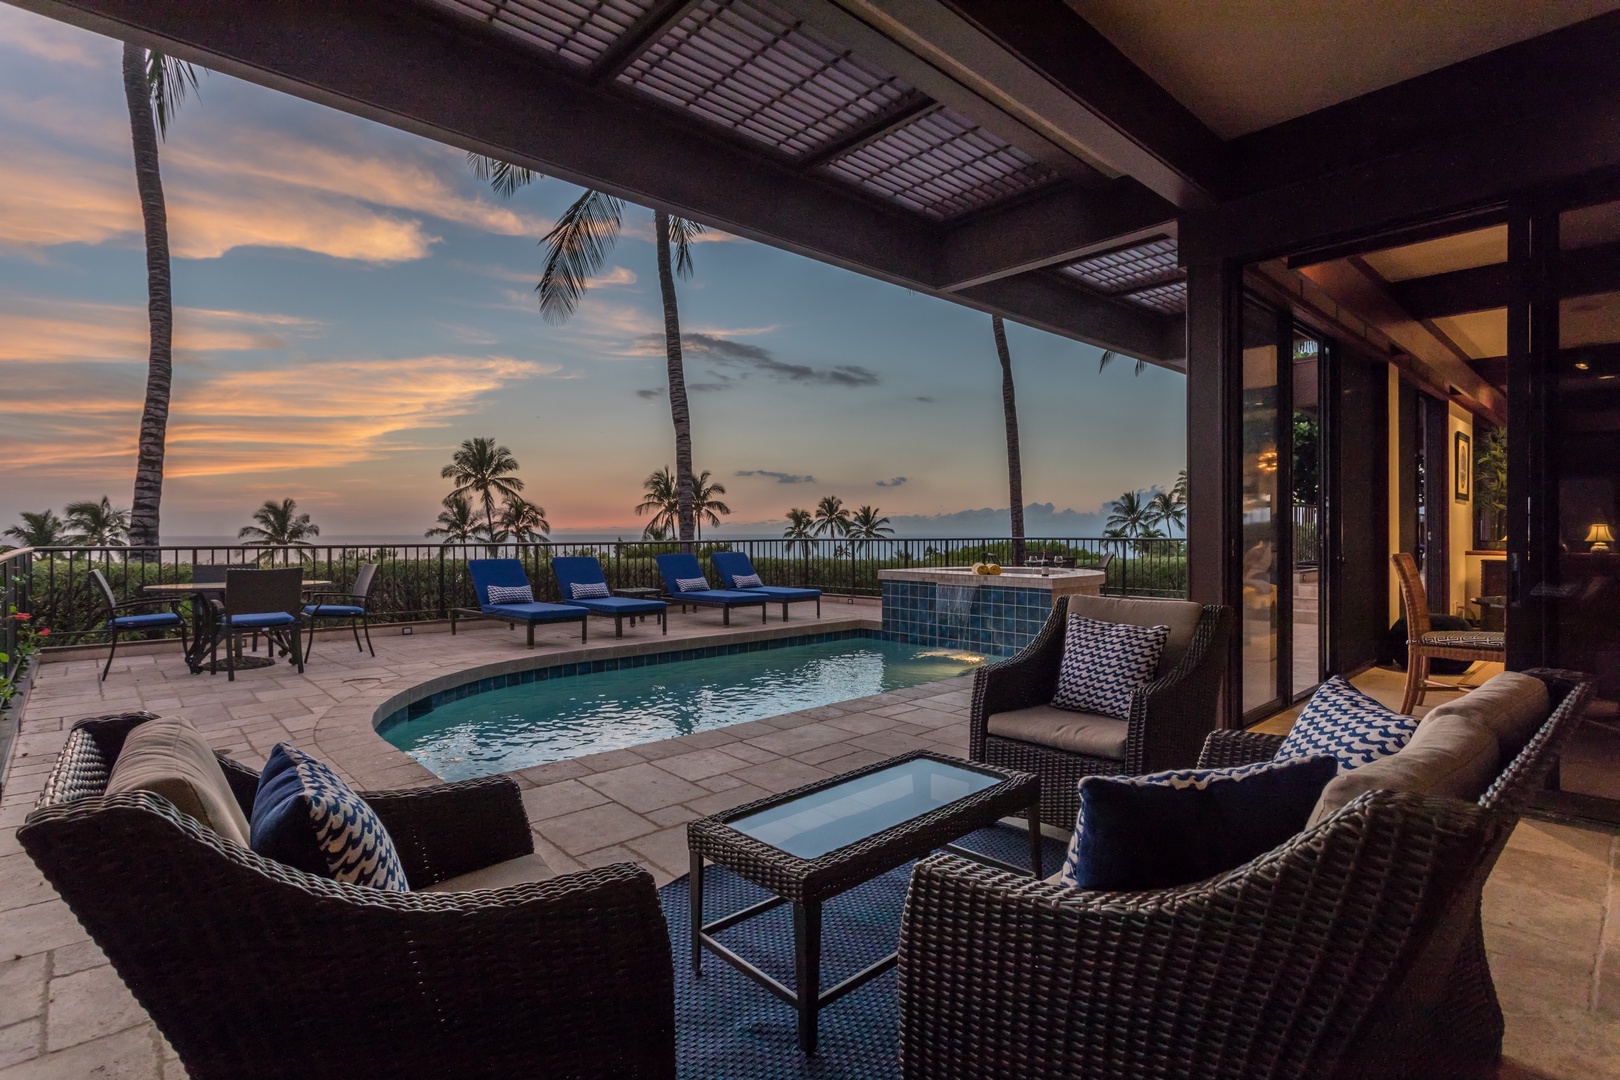 Kamuela Vacation Rentals, 3BD Villas (39) at Mauna Kea Resort - Alternate view of primary deck seating at sunset.